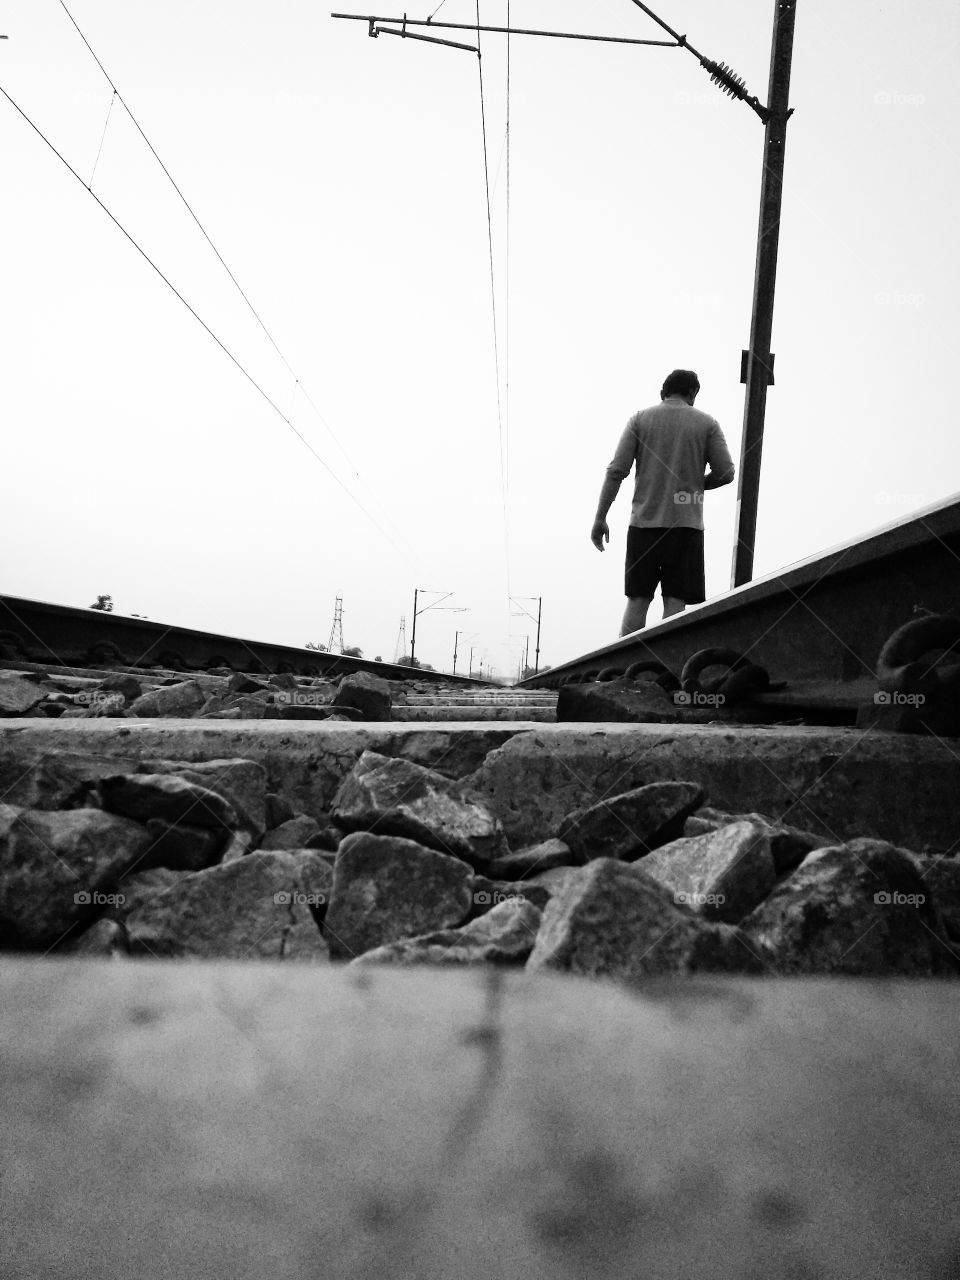 Evening walk on the railway track